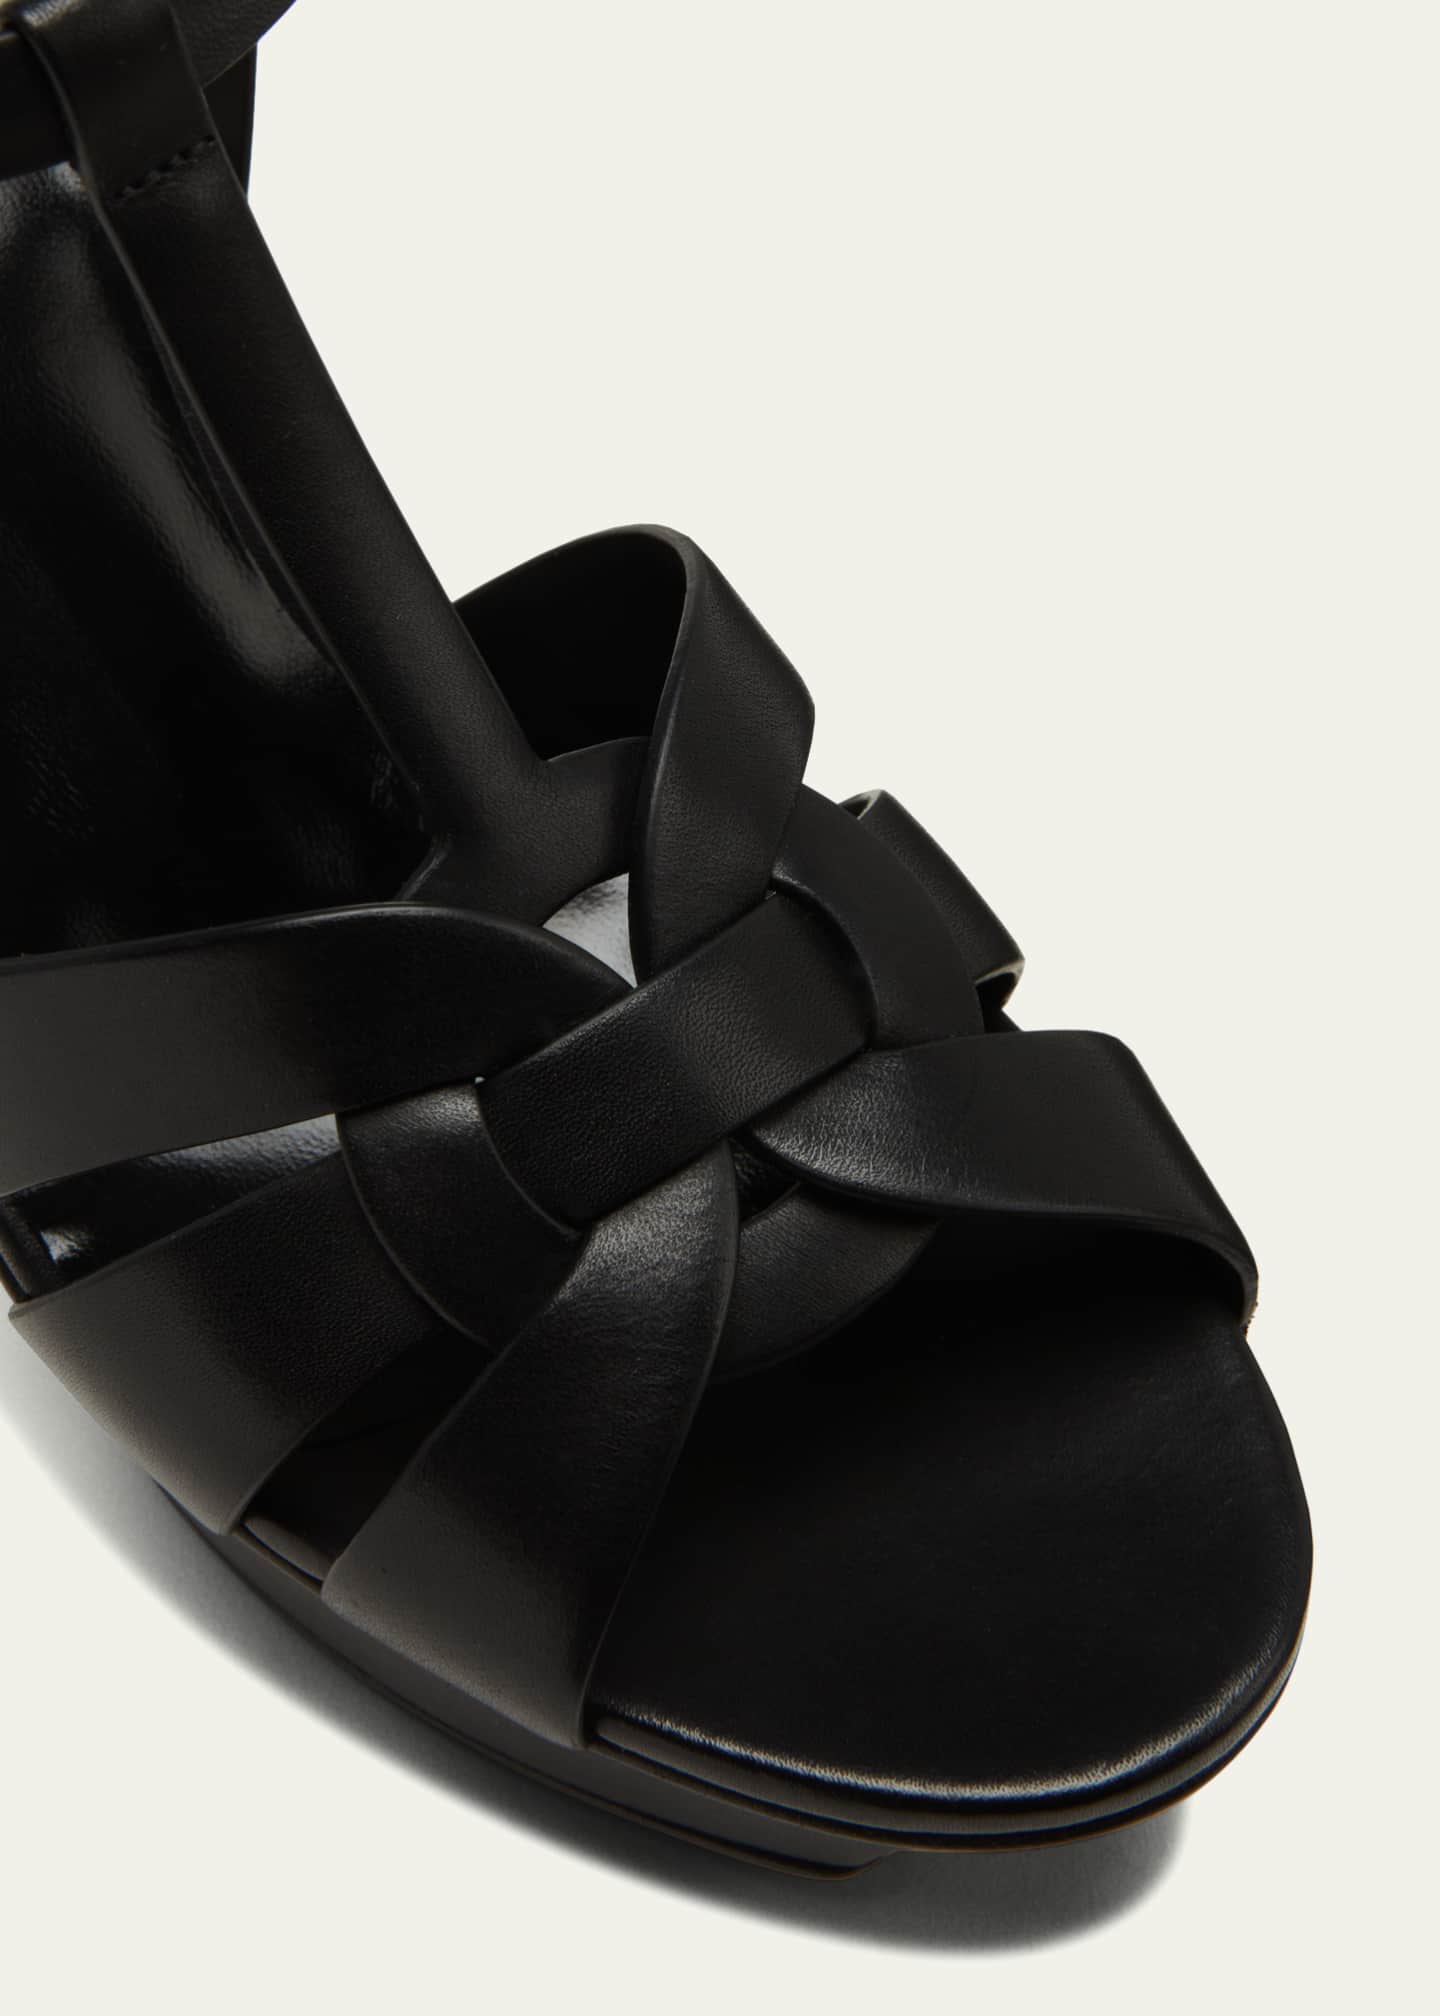 Saint Laurent Tribute Leather Platform Sandals - Bergdorf Goodman